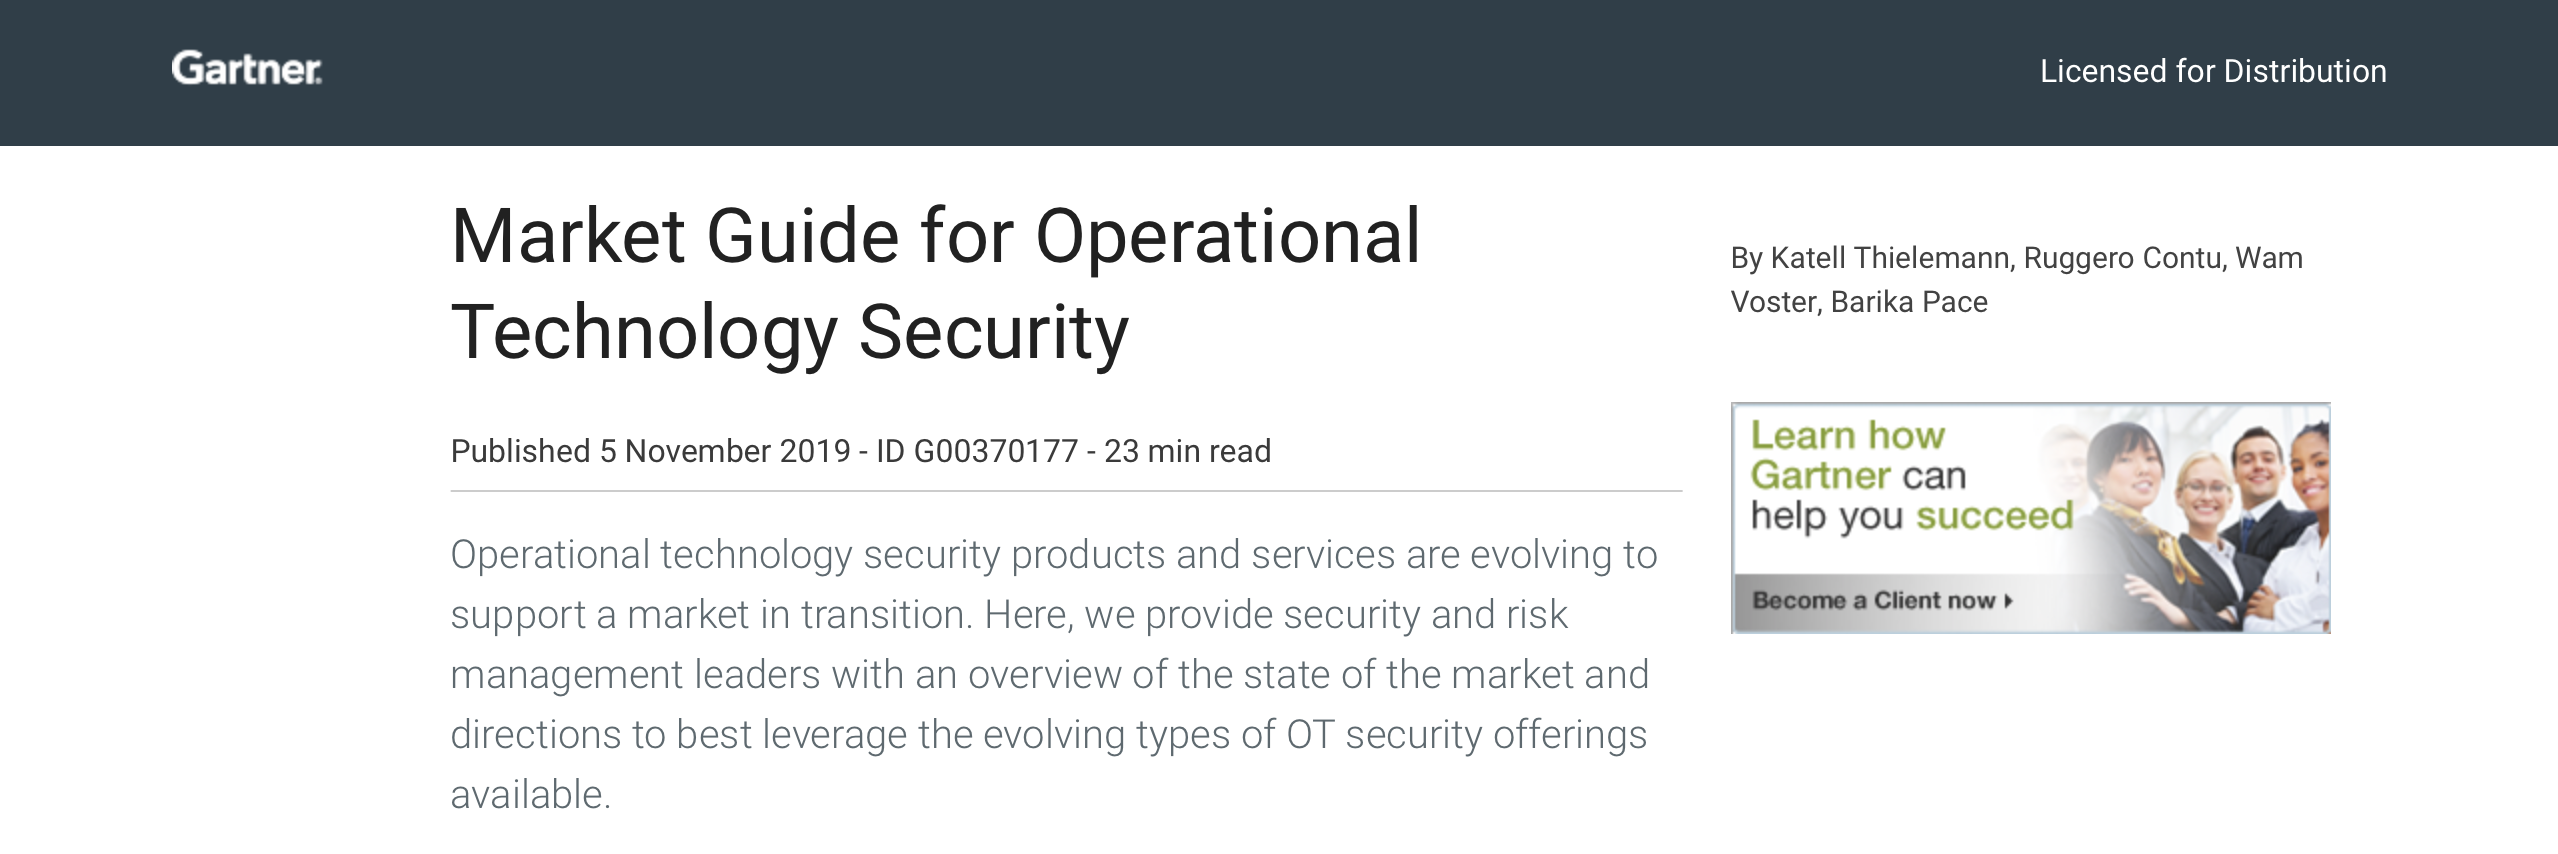 Screenshot 2020 11 04 at 21.41.53 - Gartner Market Guide for Operational Technology Security